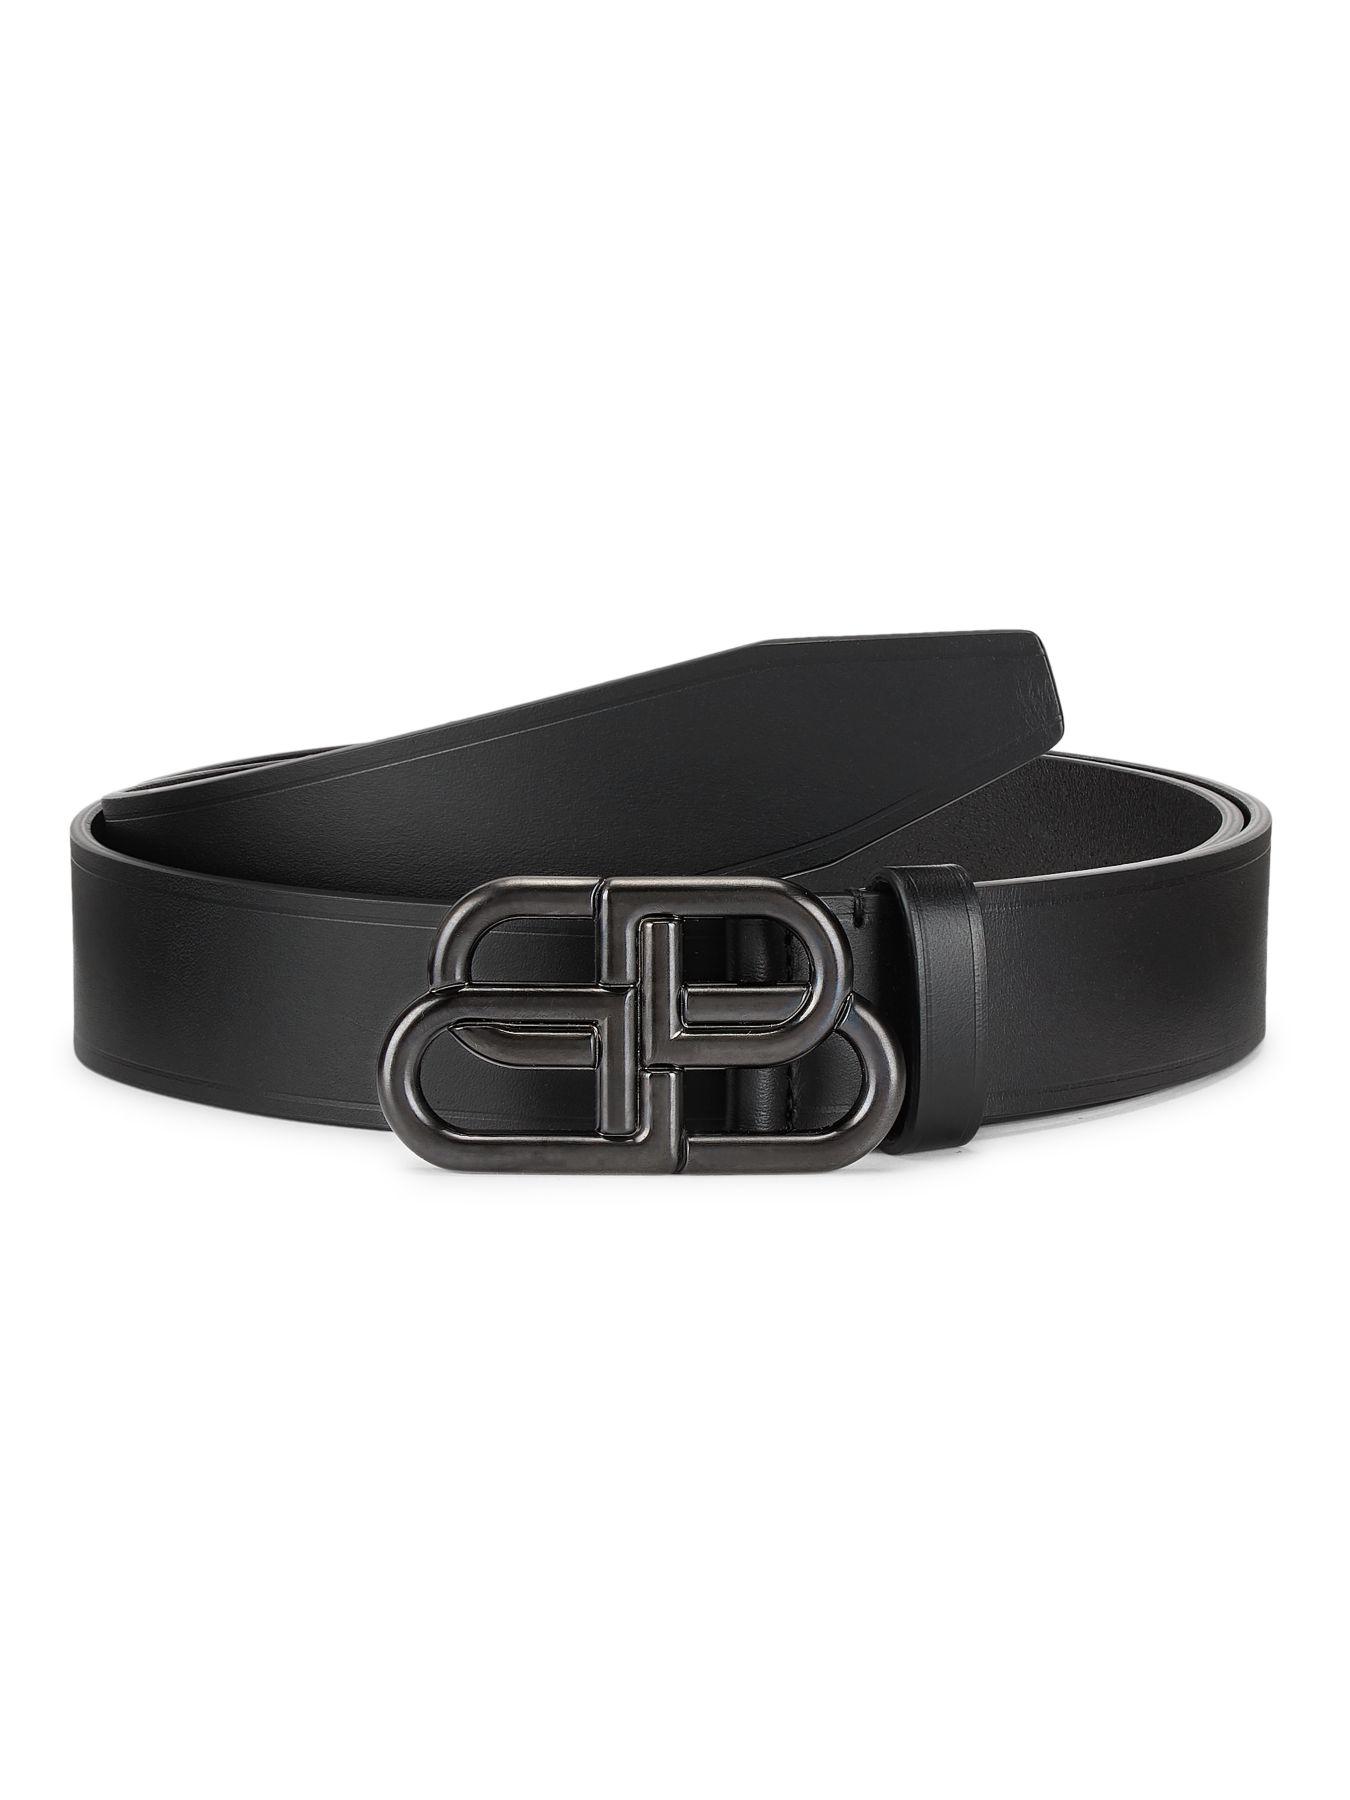 Balenciaga Large Bb Logo Leather Belt in Black for Men - Lyst